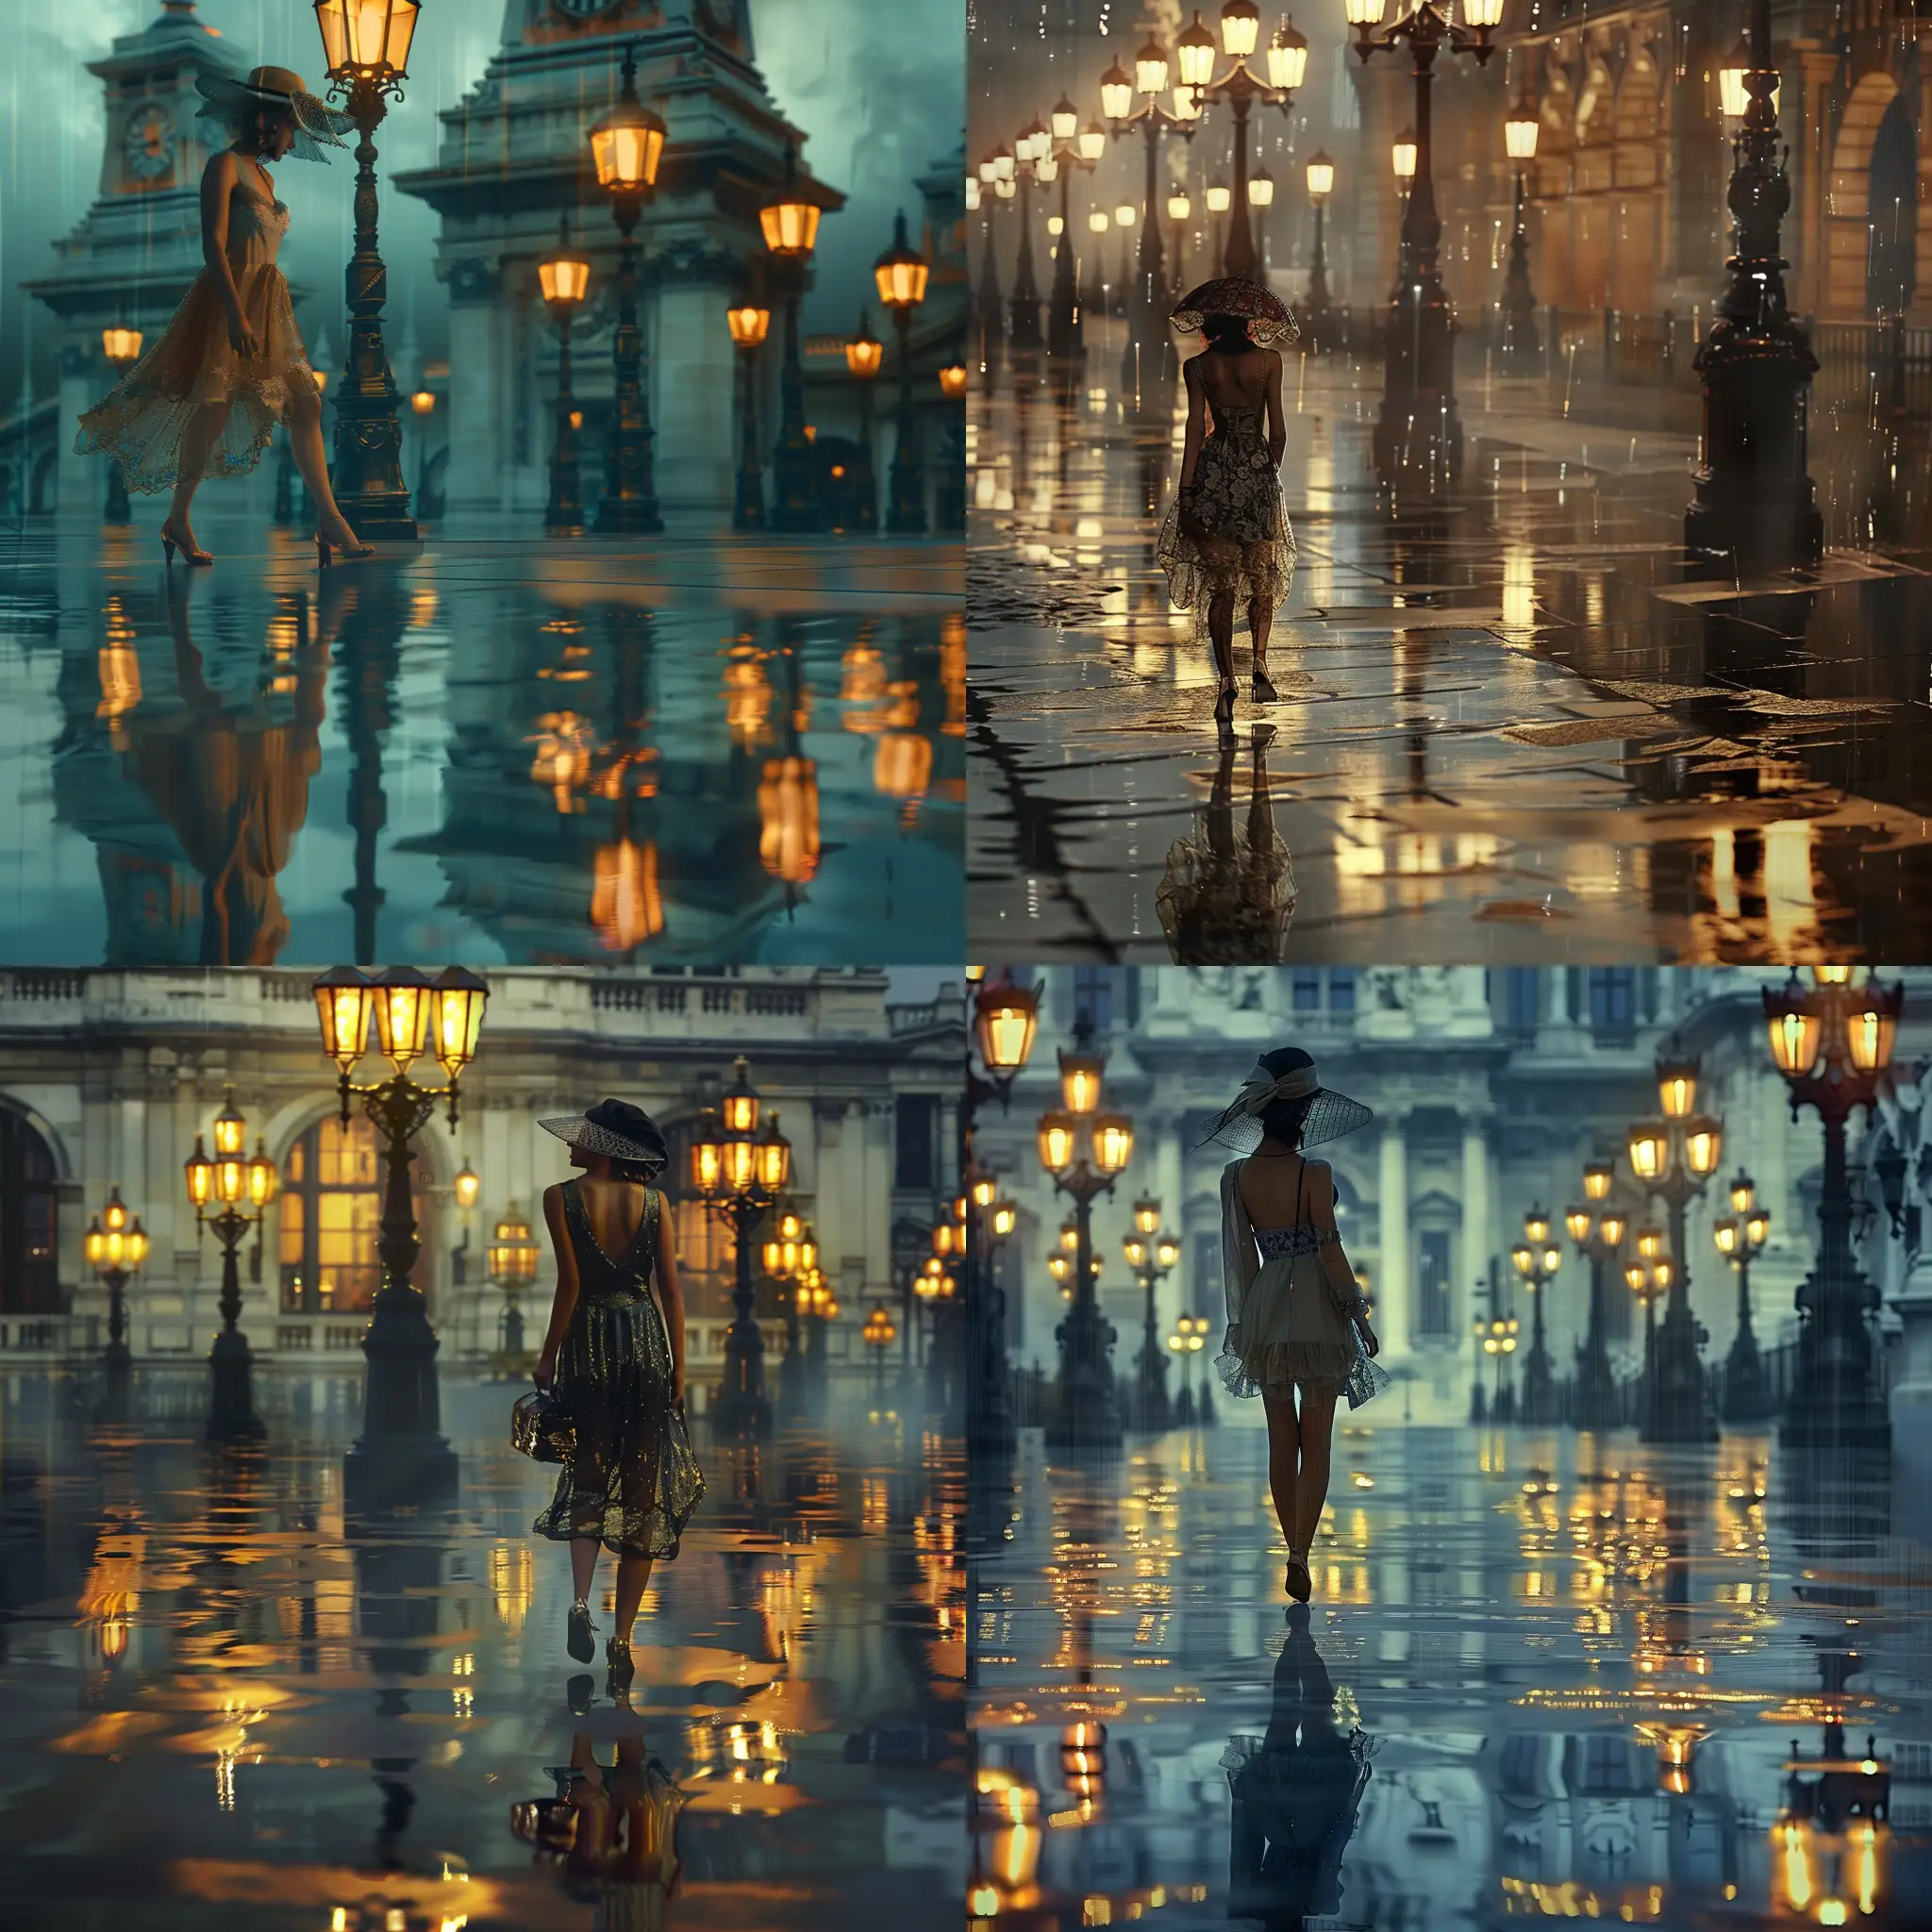 Magical-1920s-Flapper-Strolls-London-Streets-in-Enchanting-Rain